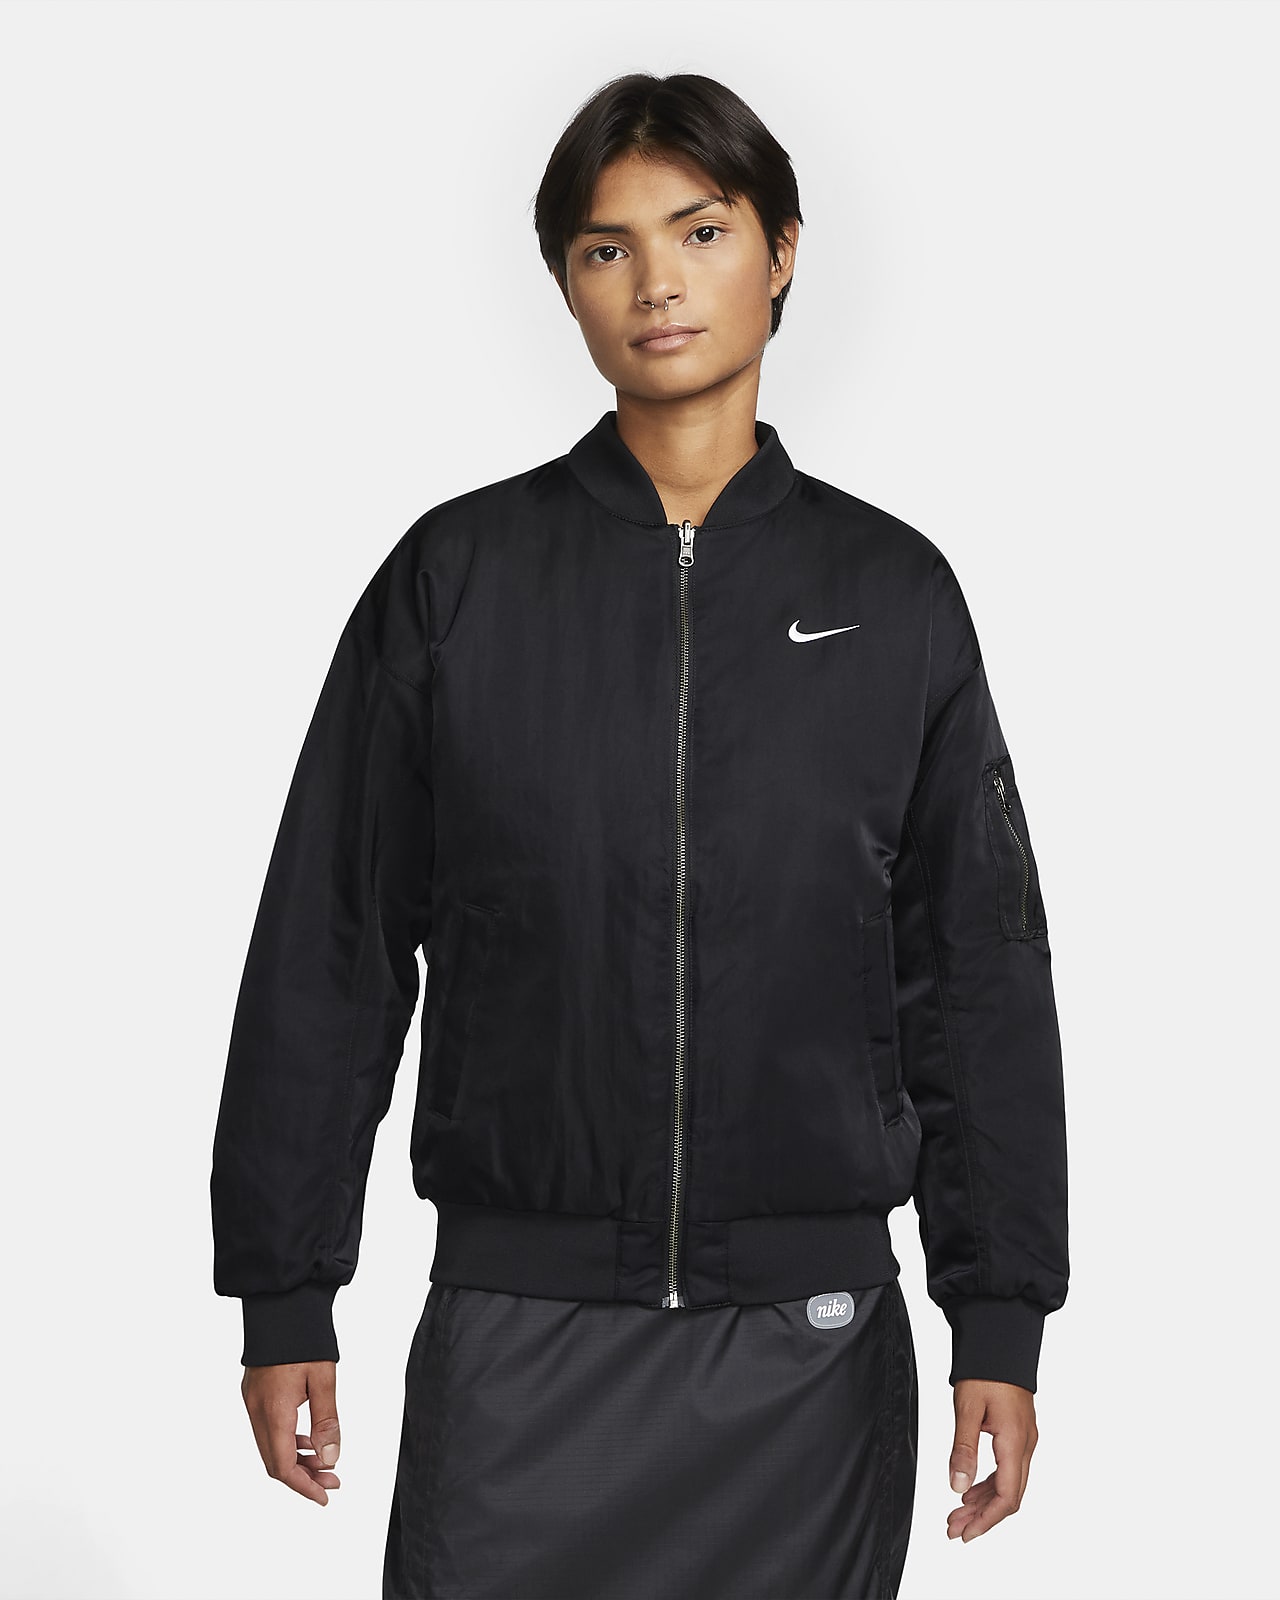 Pareja Ajustarse Accidental Veste aviateur universitaire réversible Nike Sportswear pour femme. Nike CH